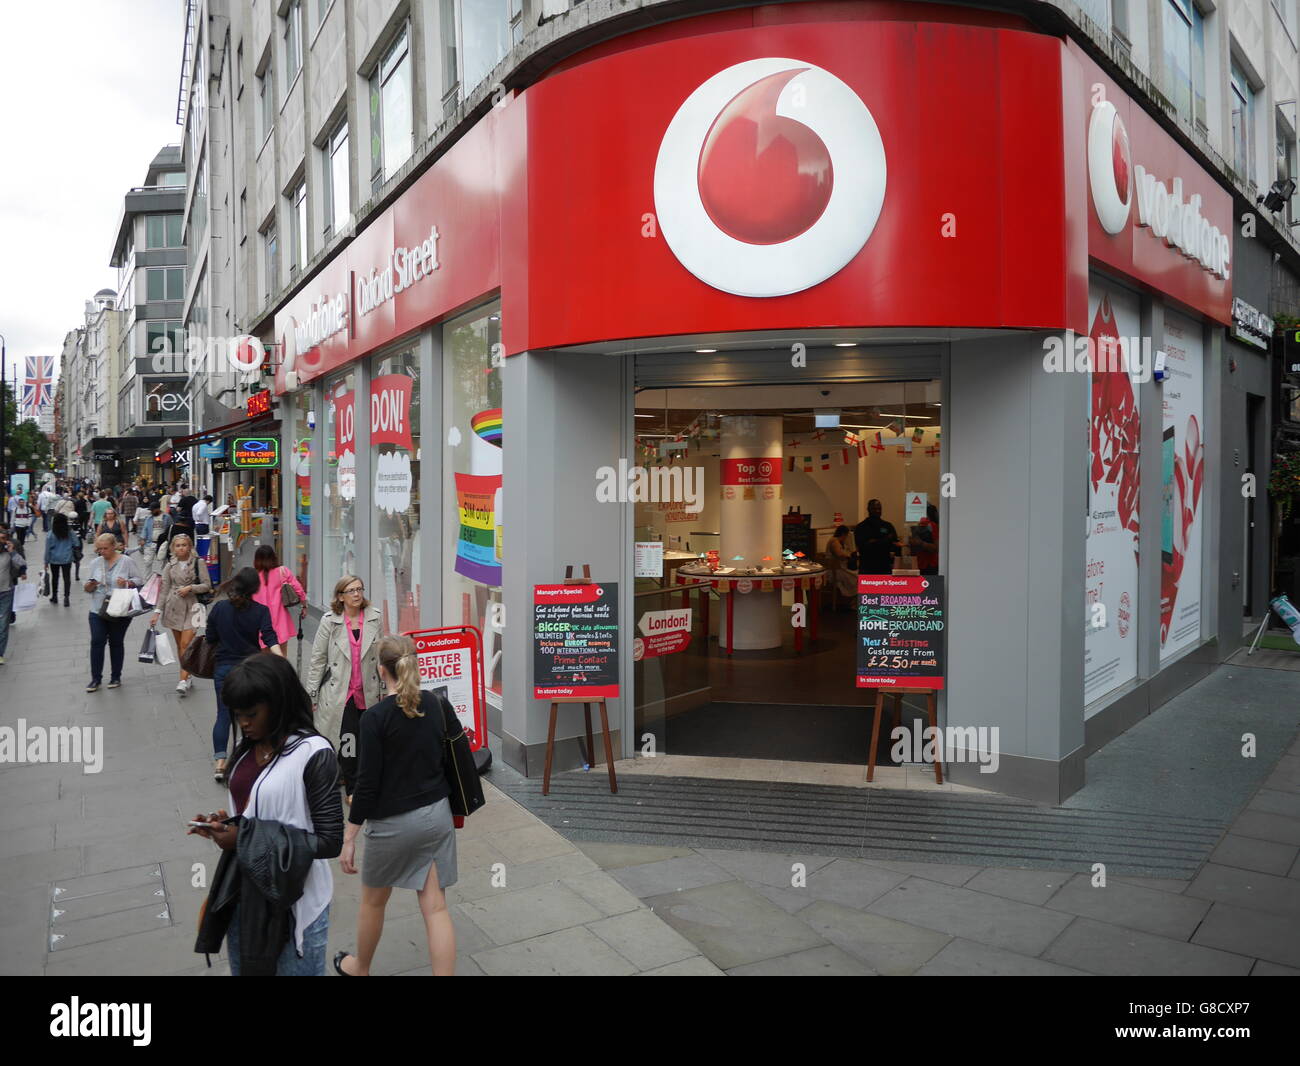 Vodafone Retail shop Oxford Street London Stock Photo